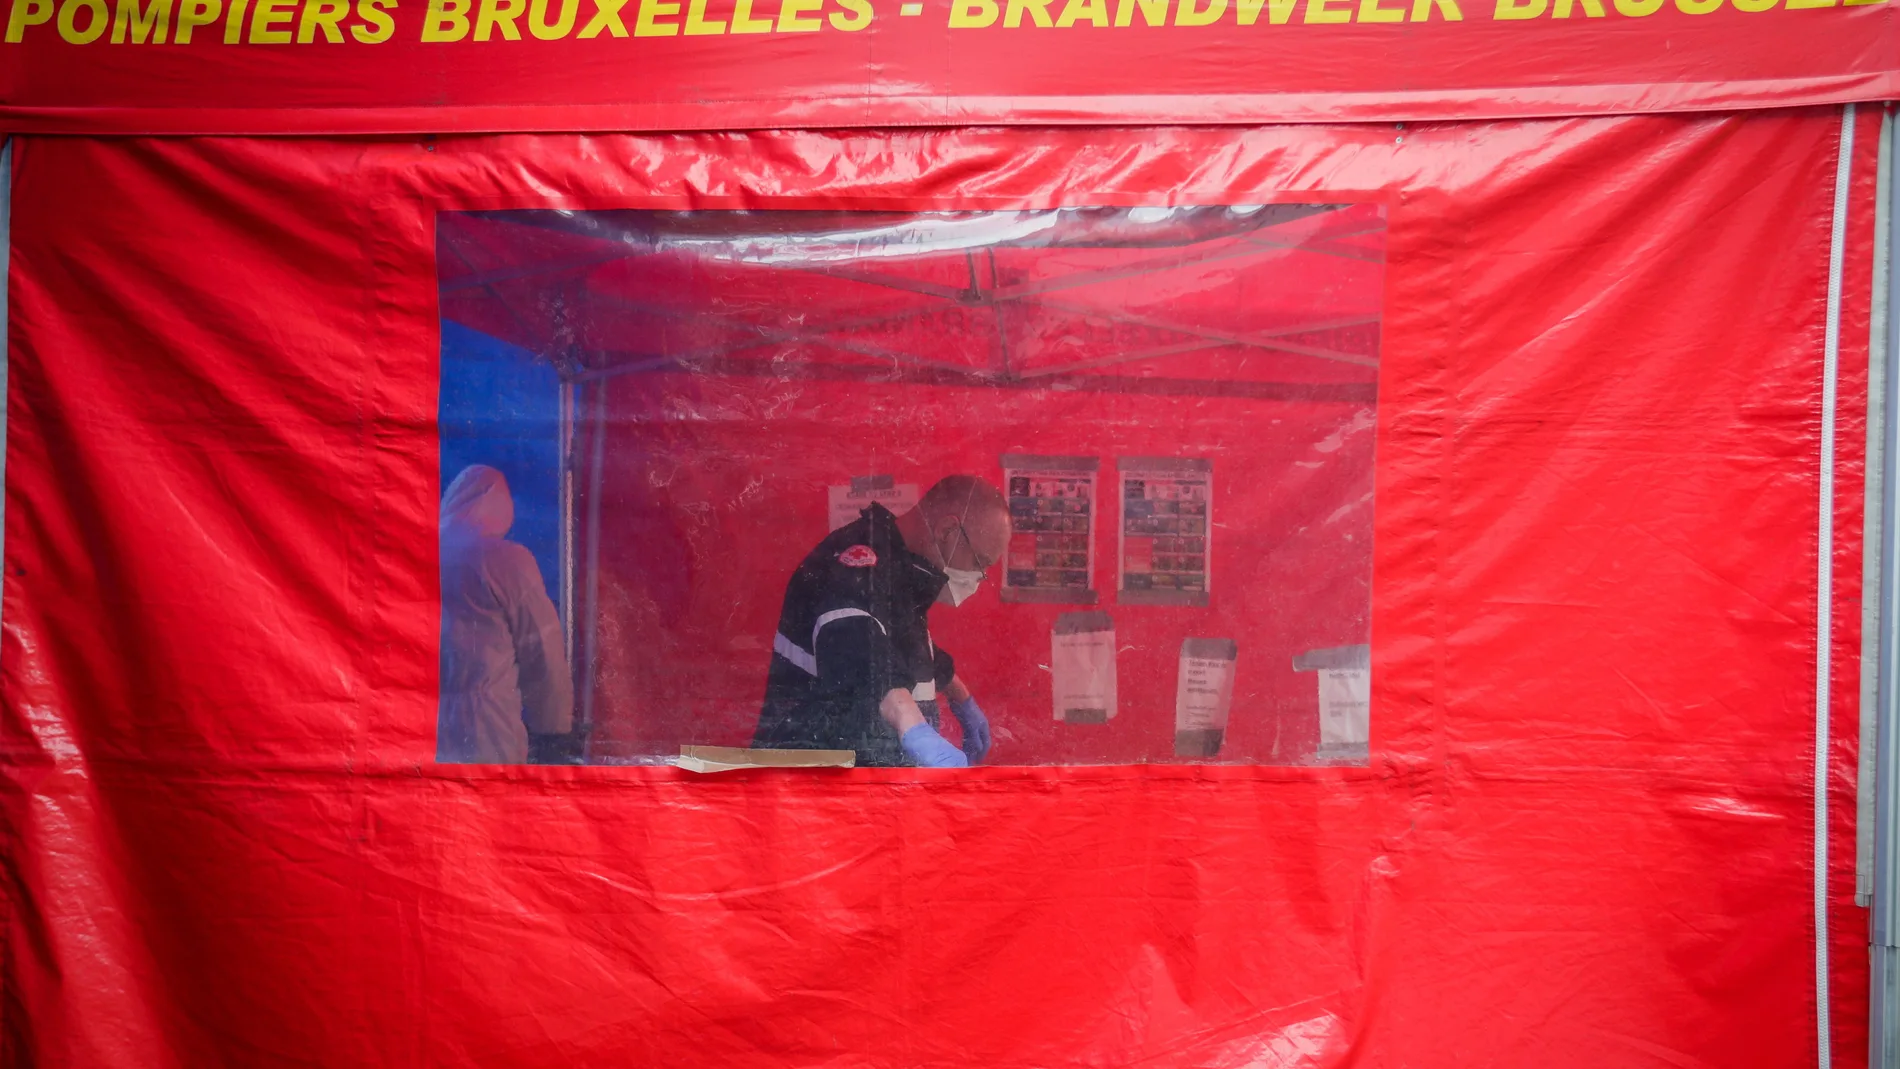 Paramedics at work during coronavirus crisis in Belgium